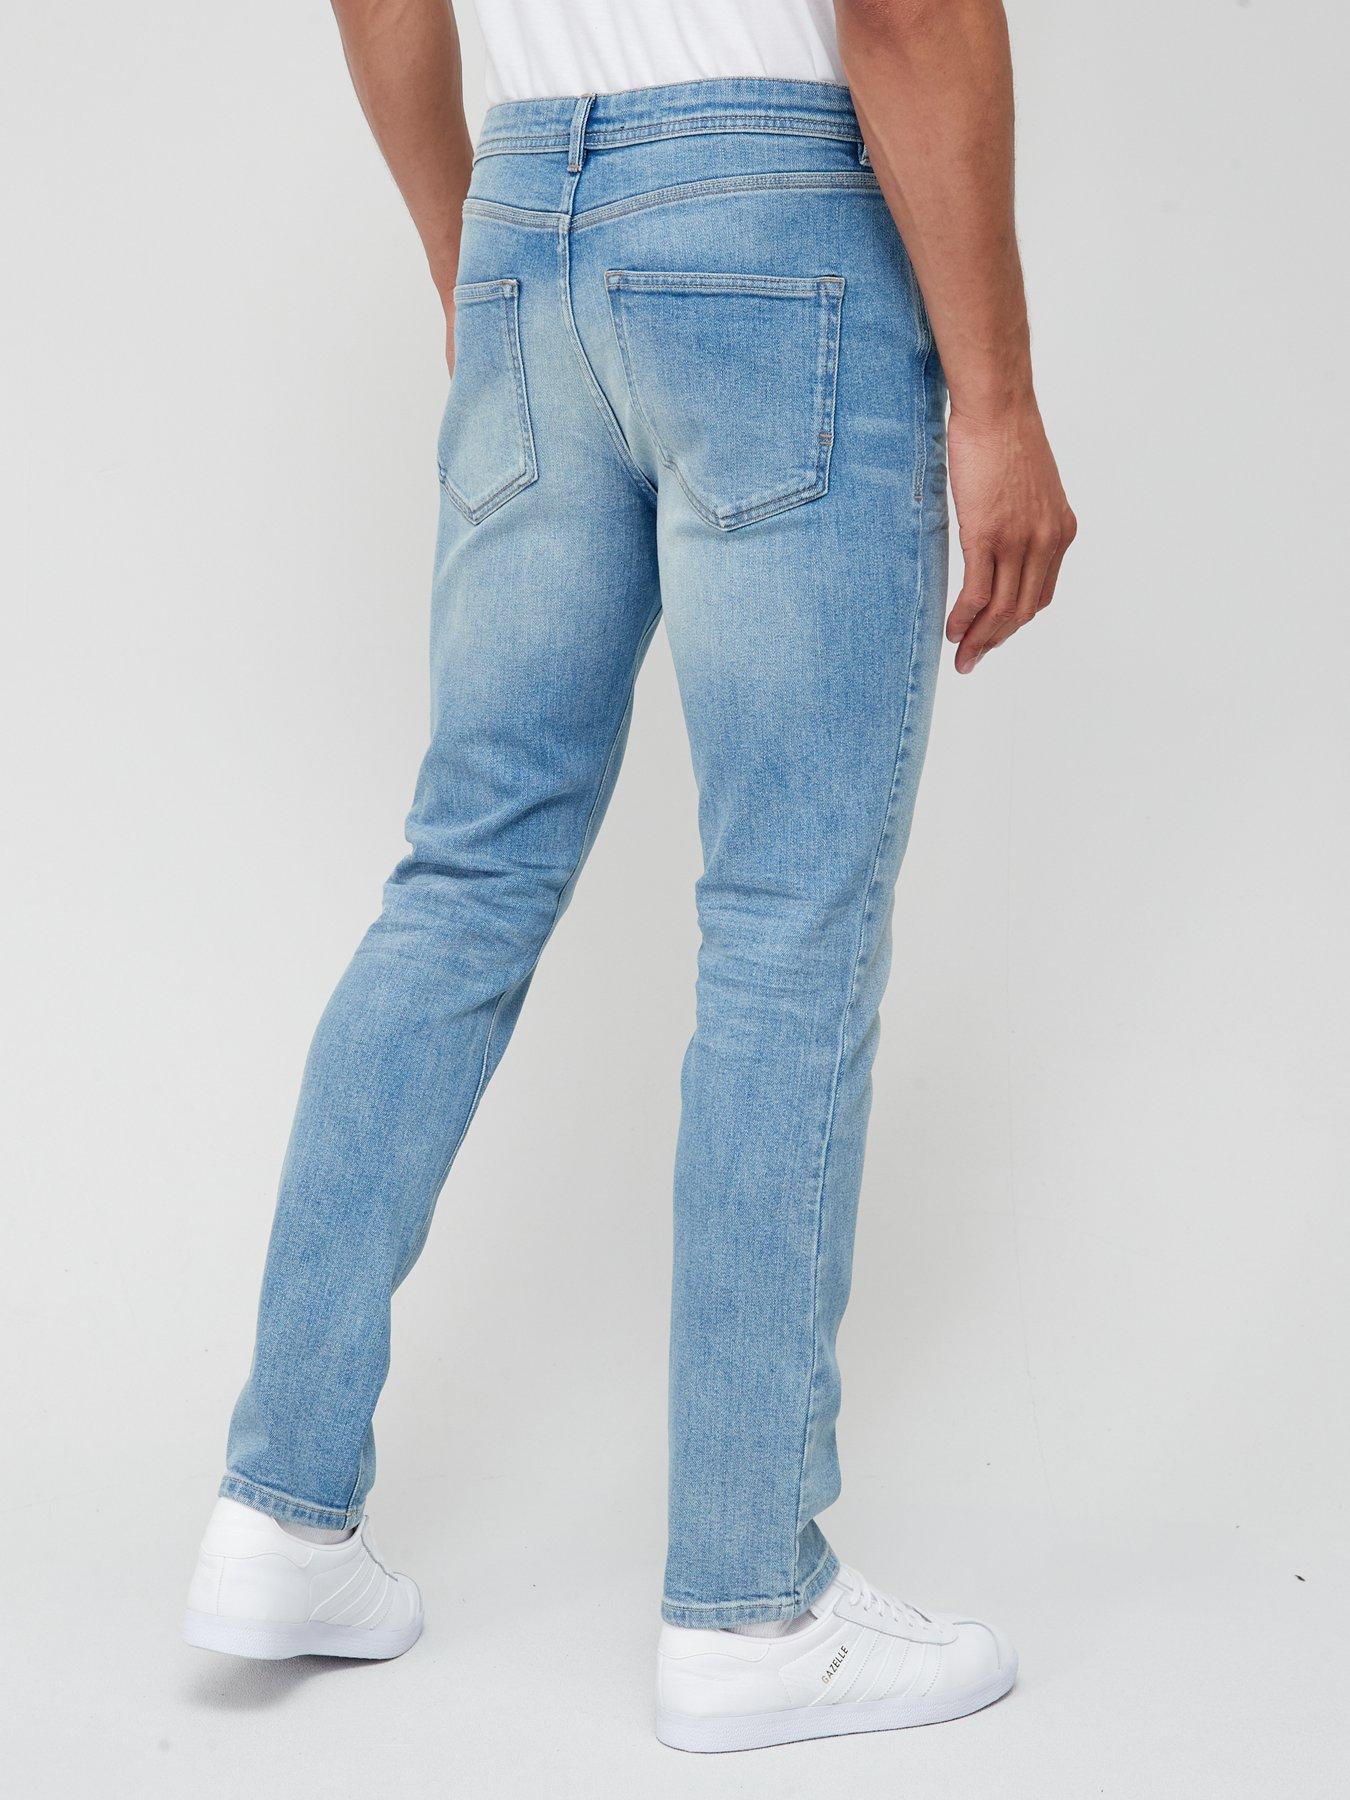 Very Man Slim Jean With Stretch - Light Blue